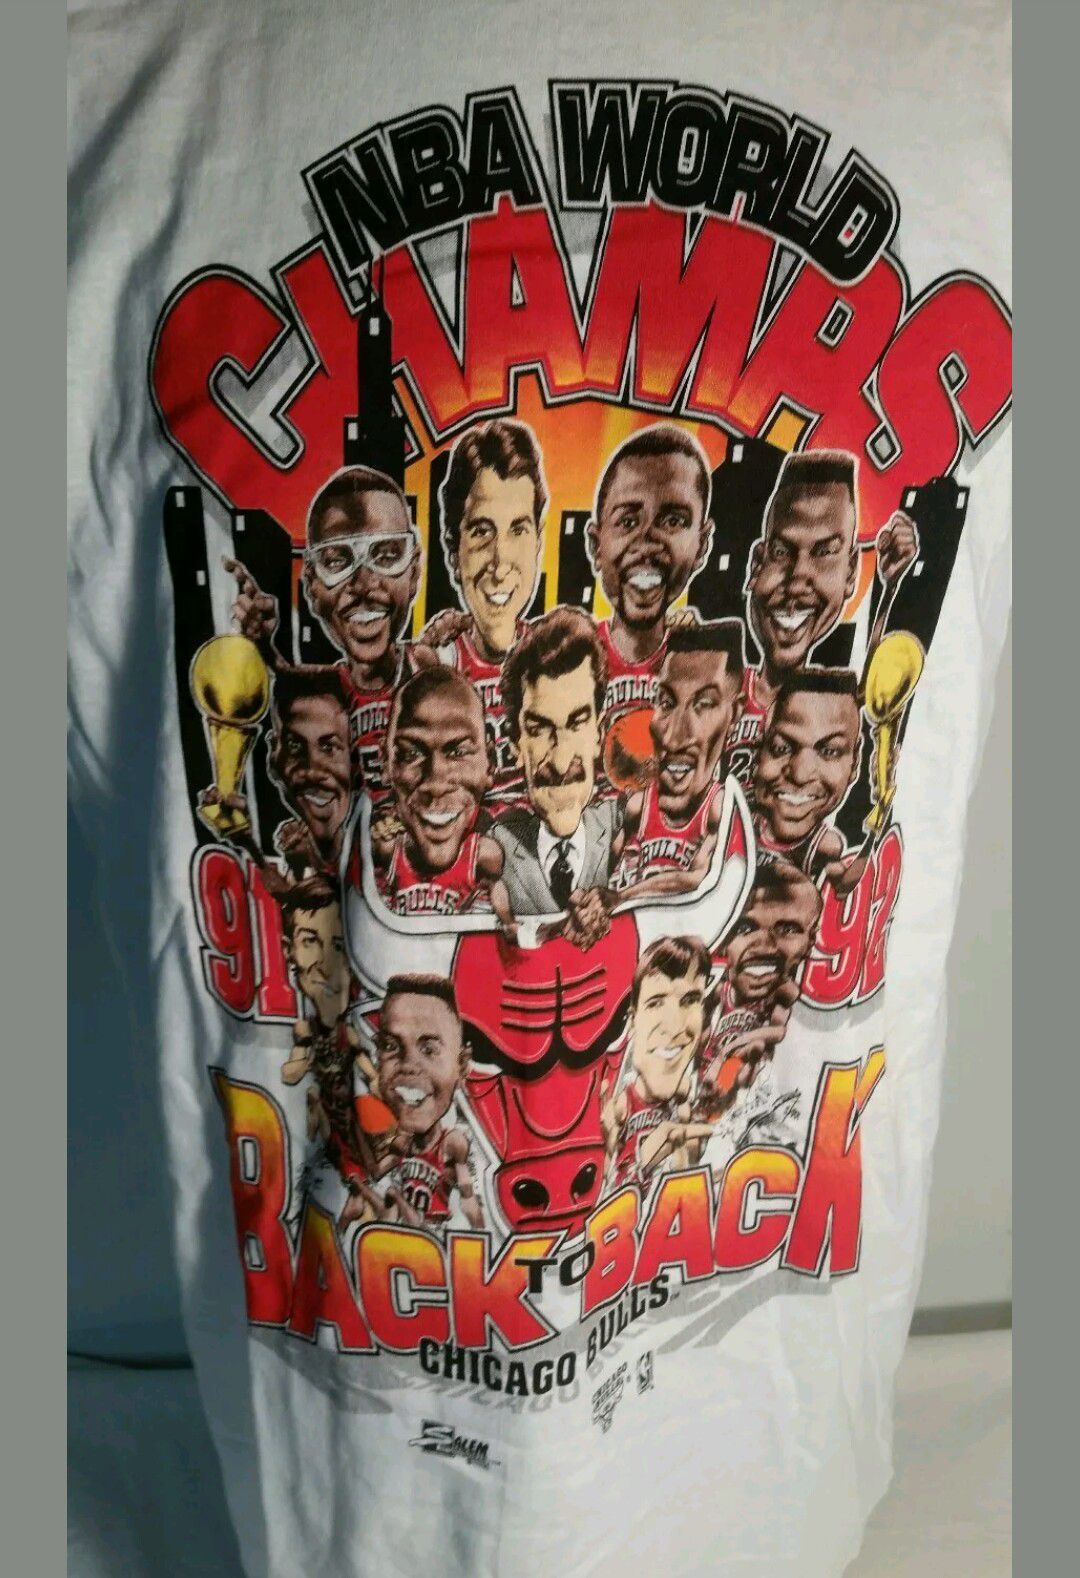 1992 Chicago Bulls caricature championship shirt. Brand new with